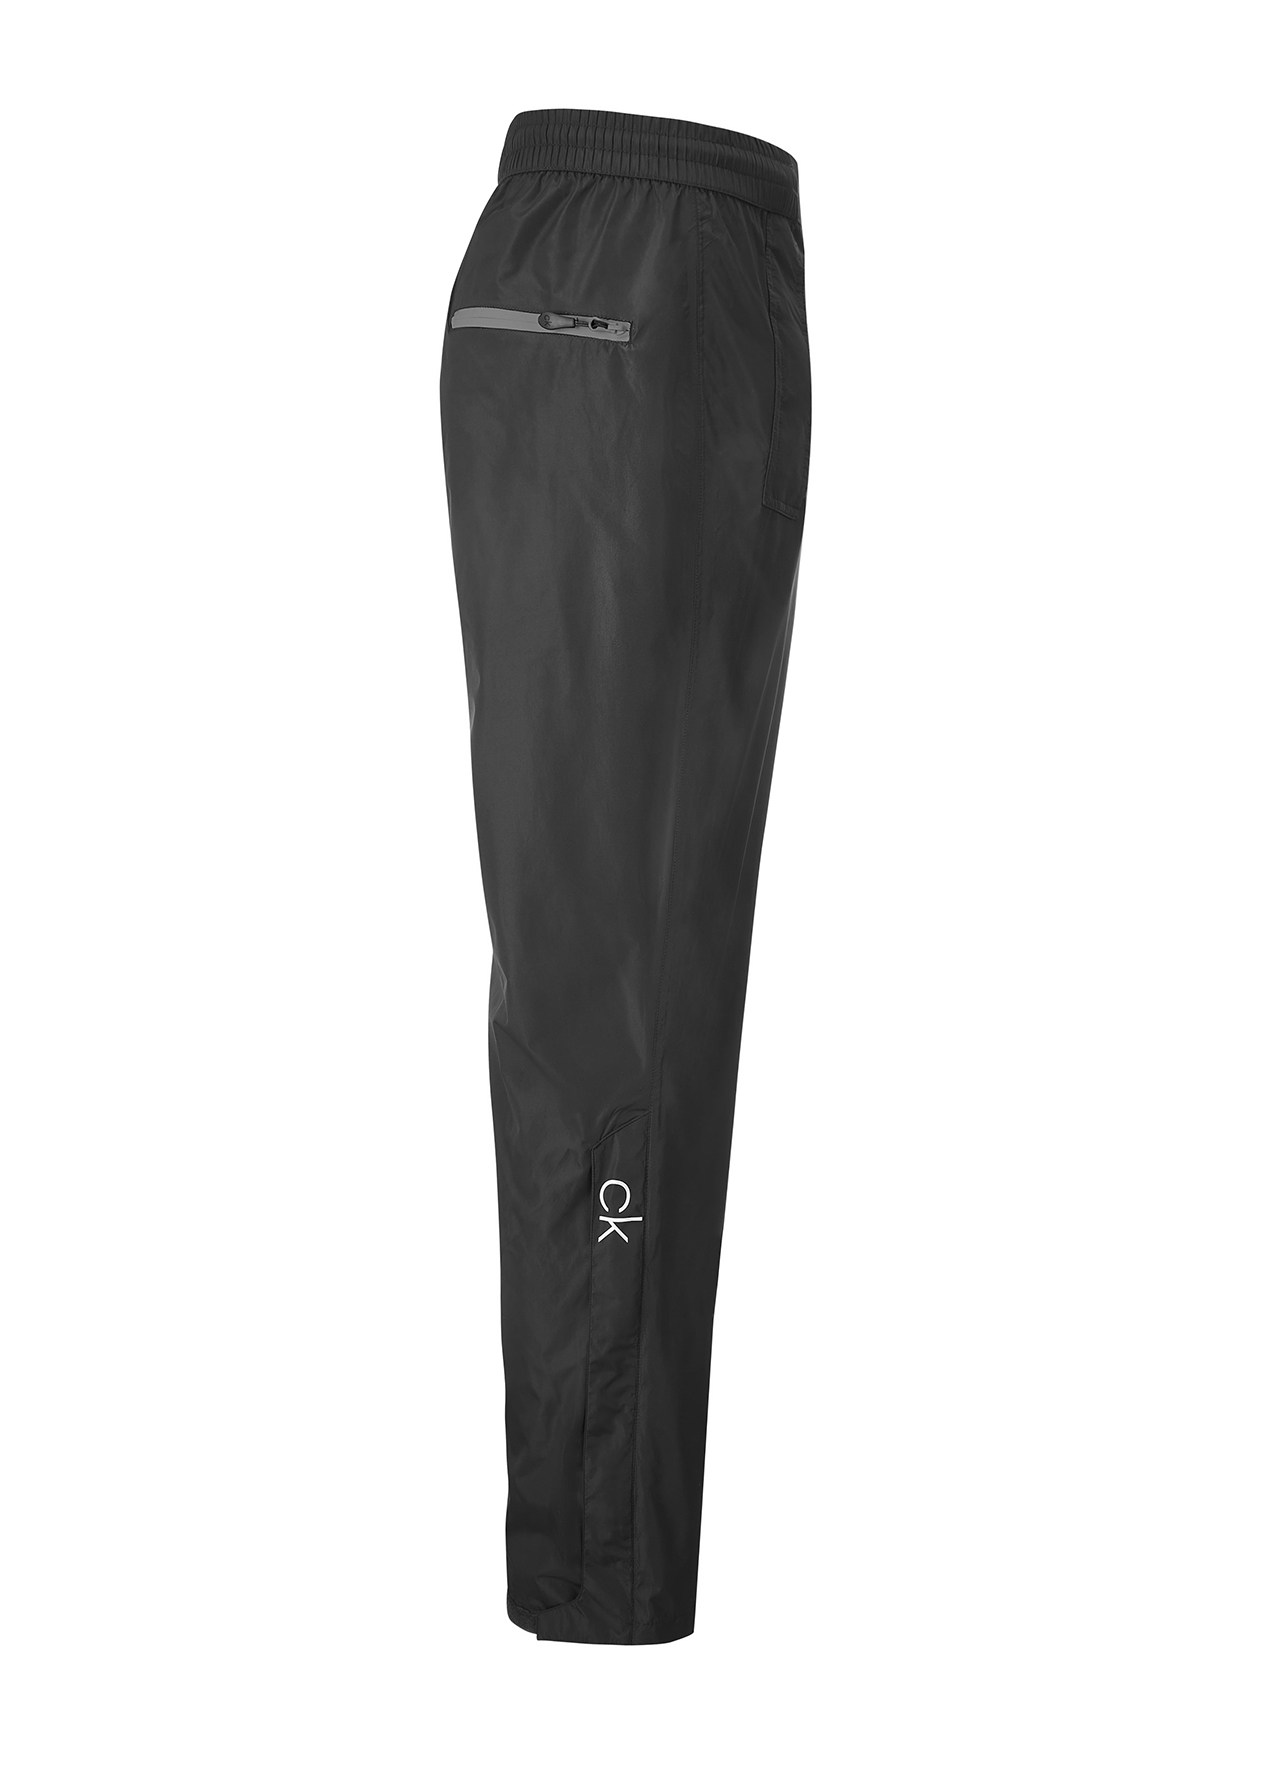 Calvin Klein Golf Waterproof Trousers BLACK, velikost  L/31, XL/31  - zvìtšit obrázek